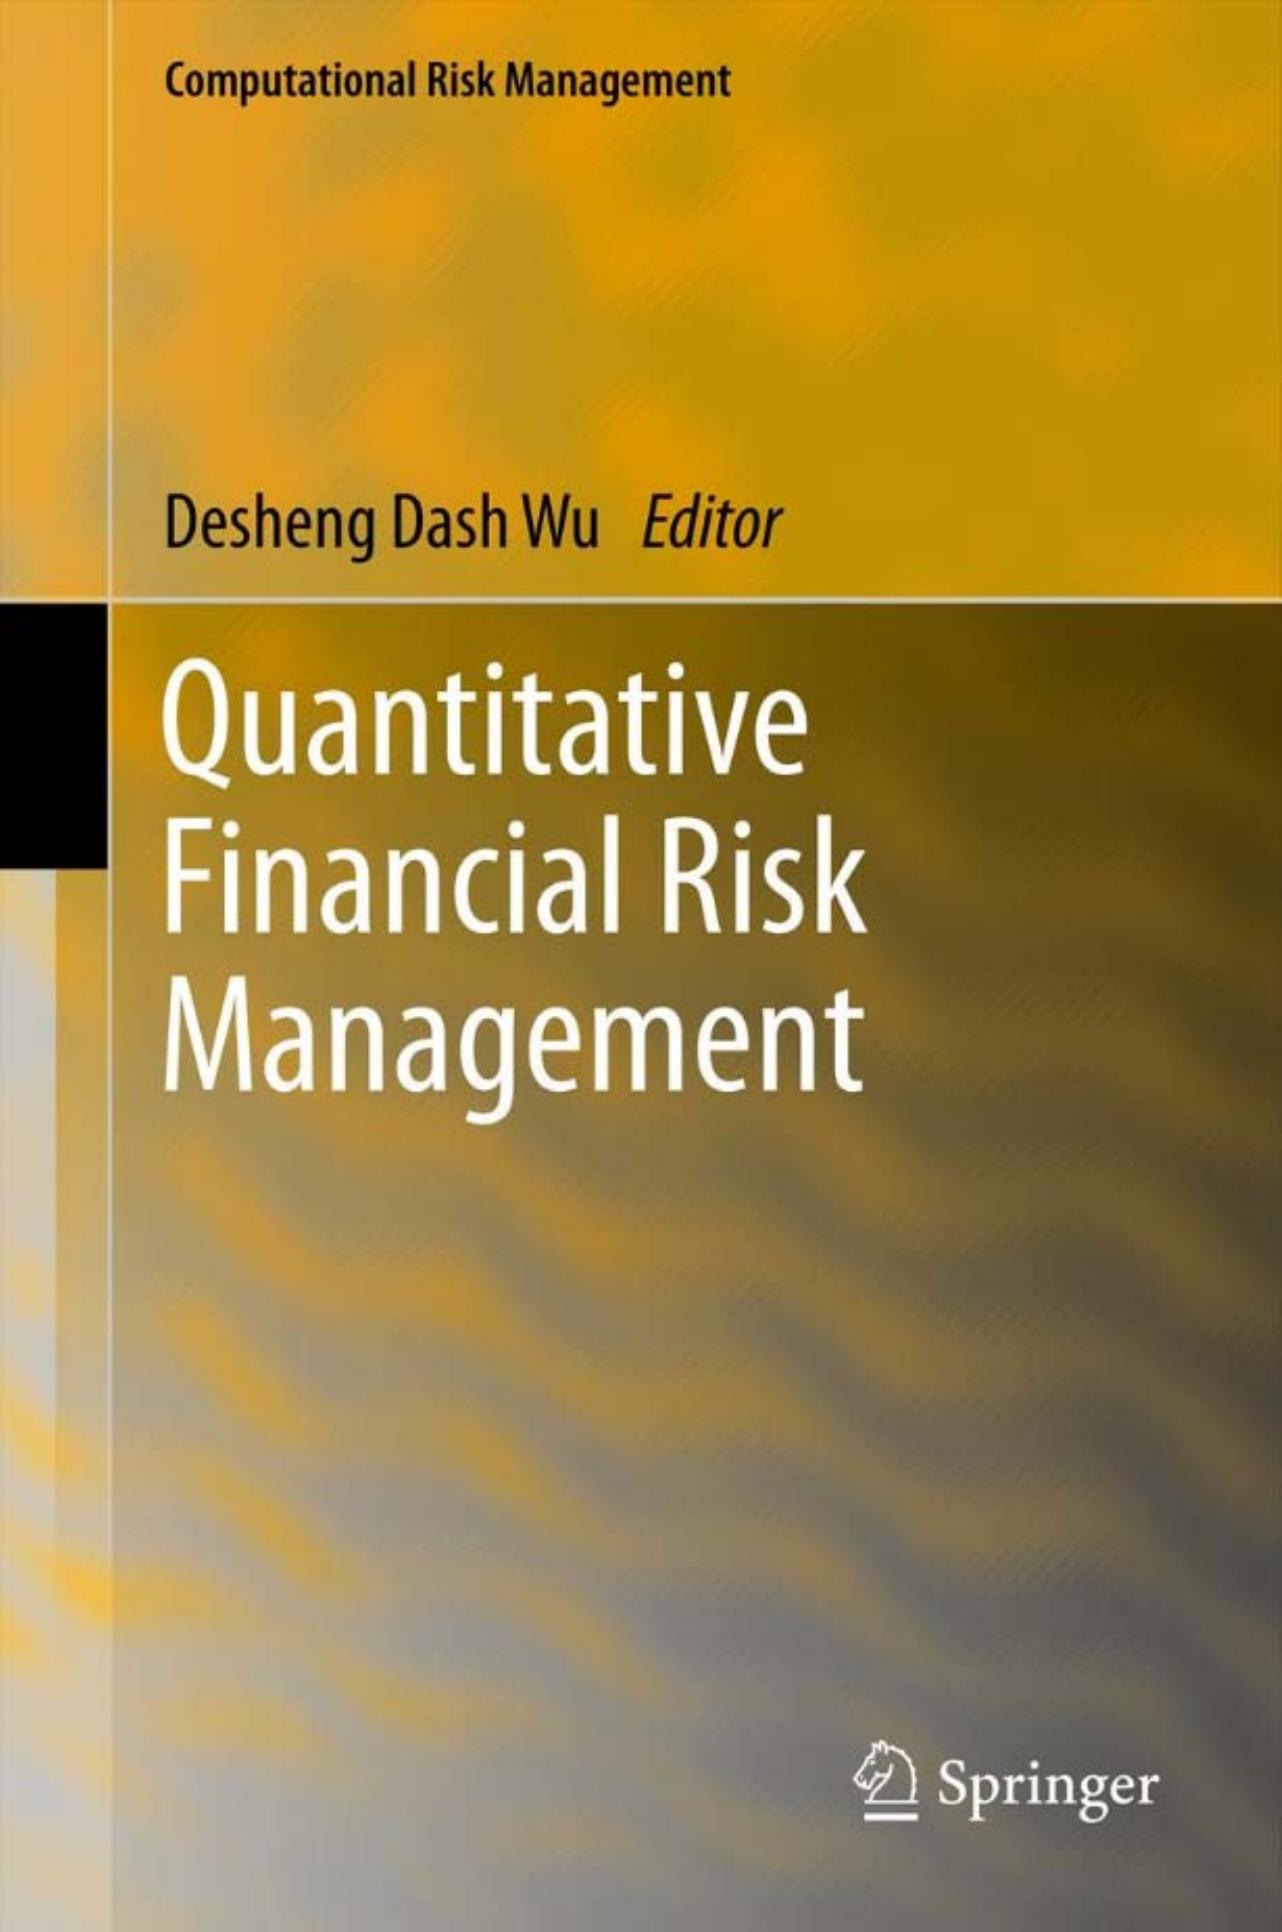 Quantitative Financial Risk Management (Computational Risk Management)